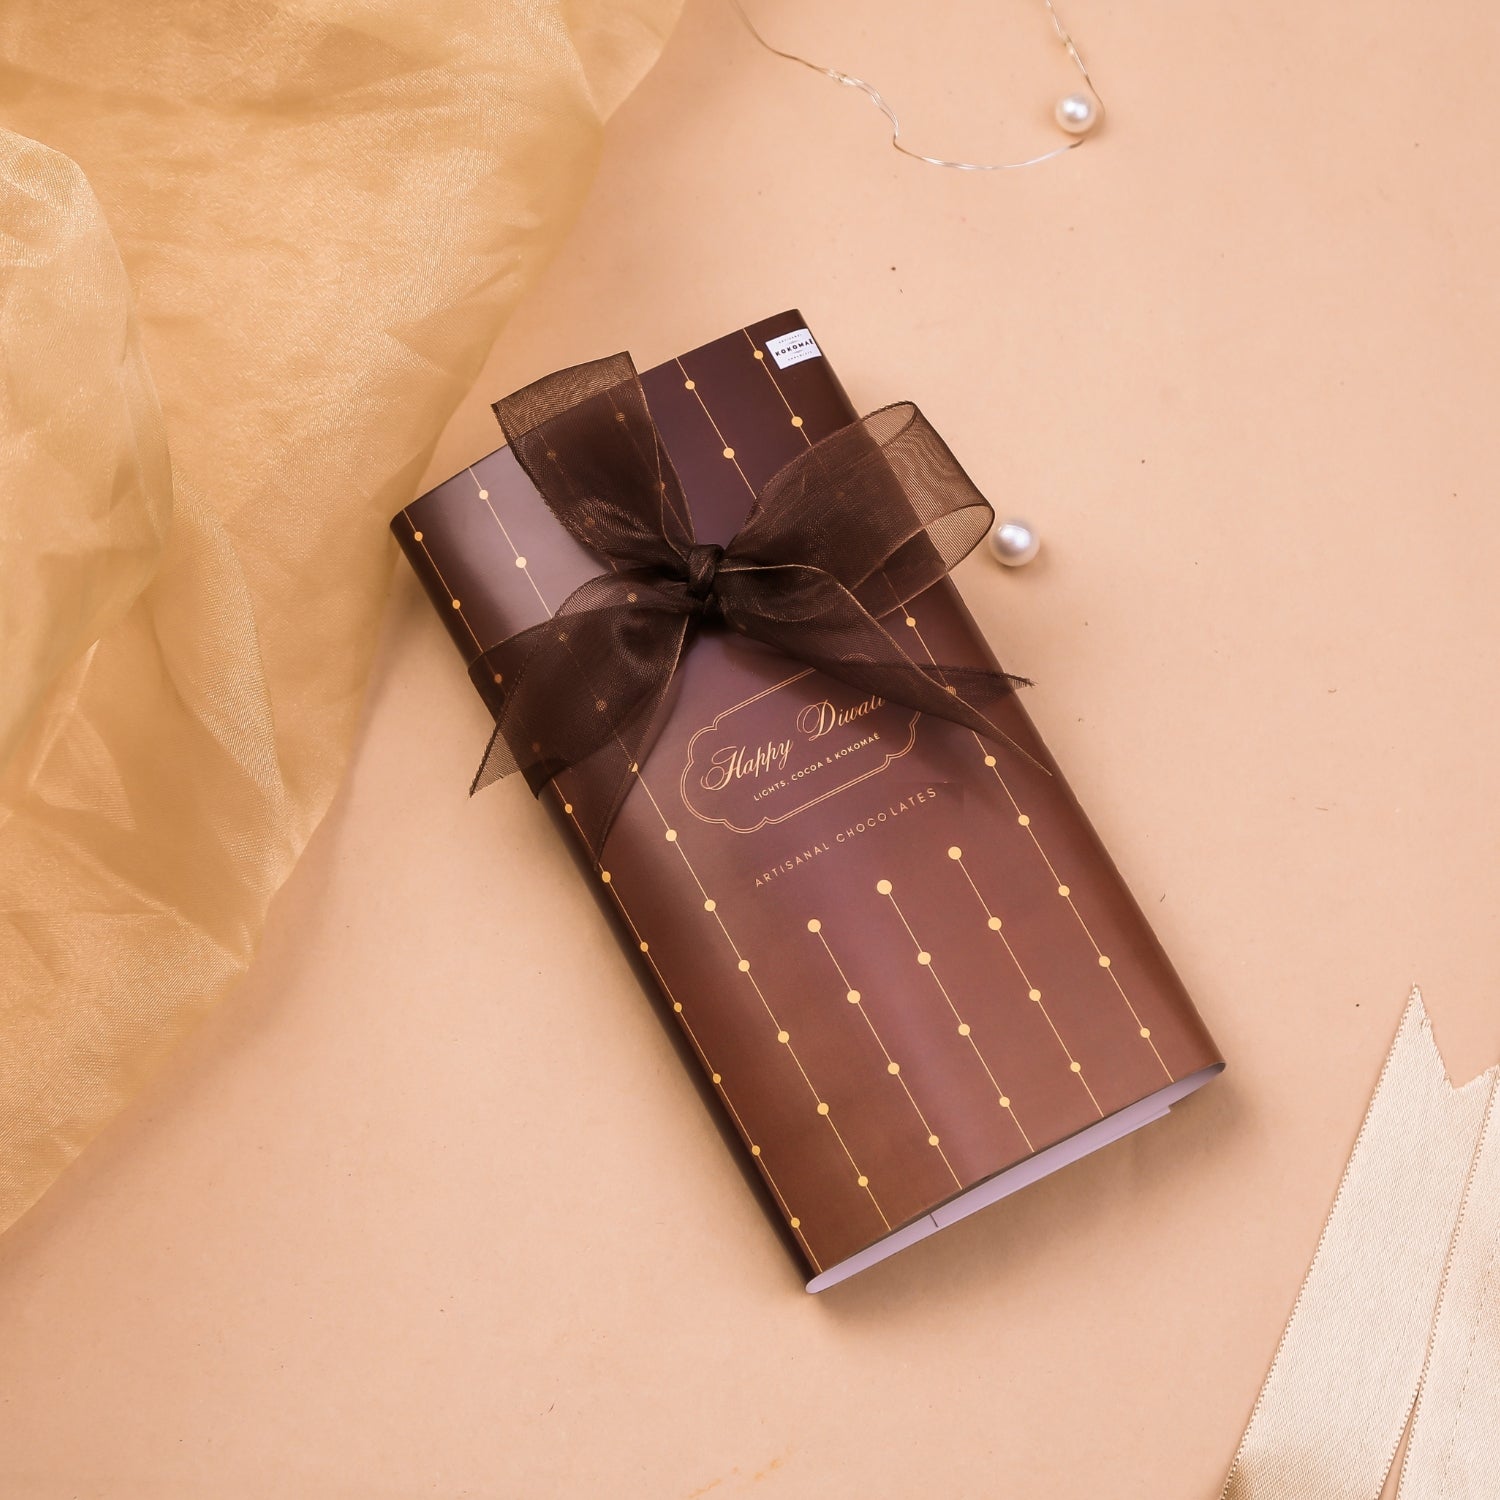 Kokomaē Premium Diwali Chocolate Offering : 60% Dark Plain & 60% Dark with Coconut and a Candle